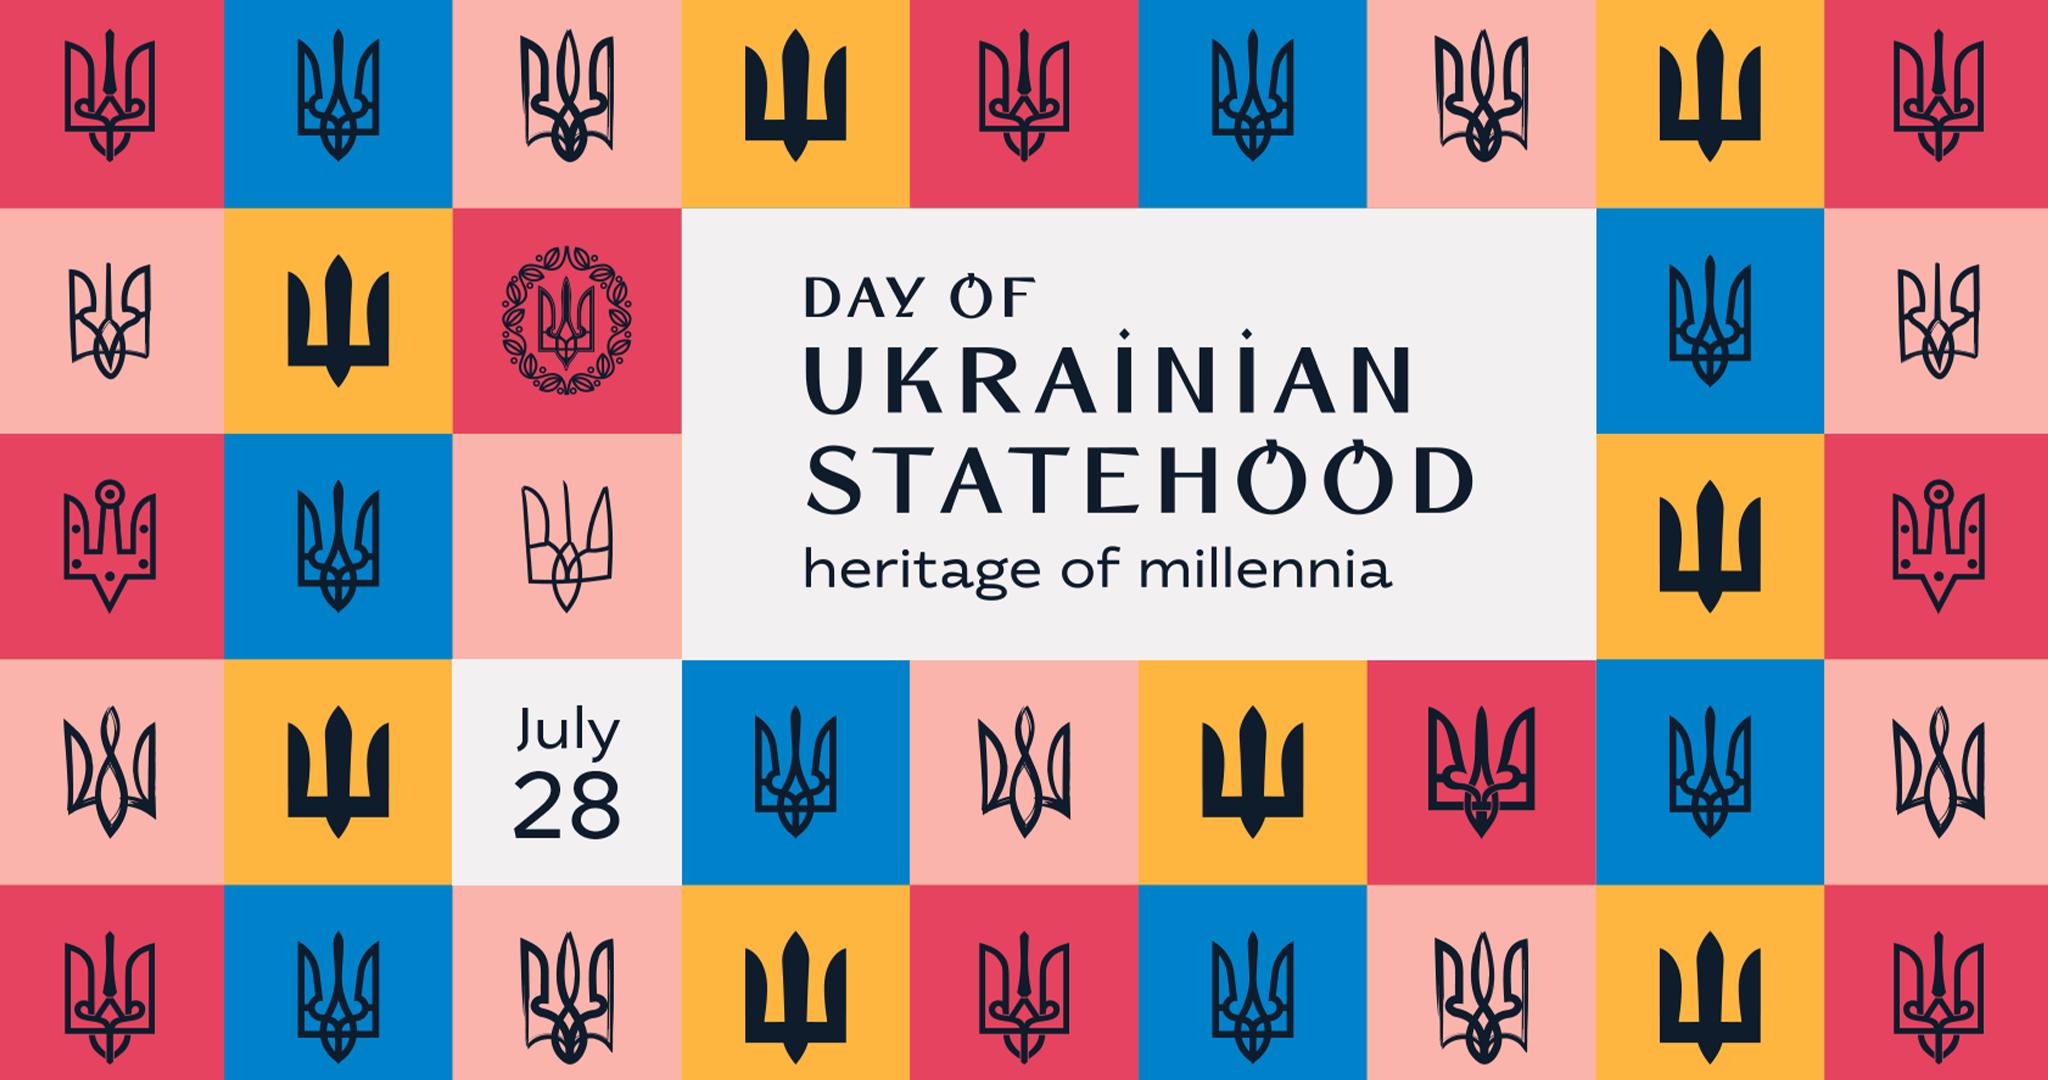 July 28 - Day of Ukrainian Statehood